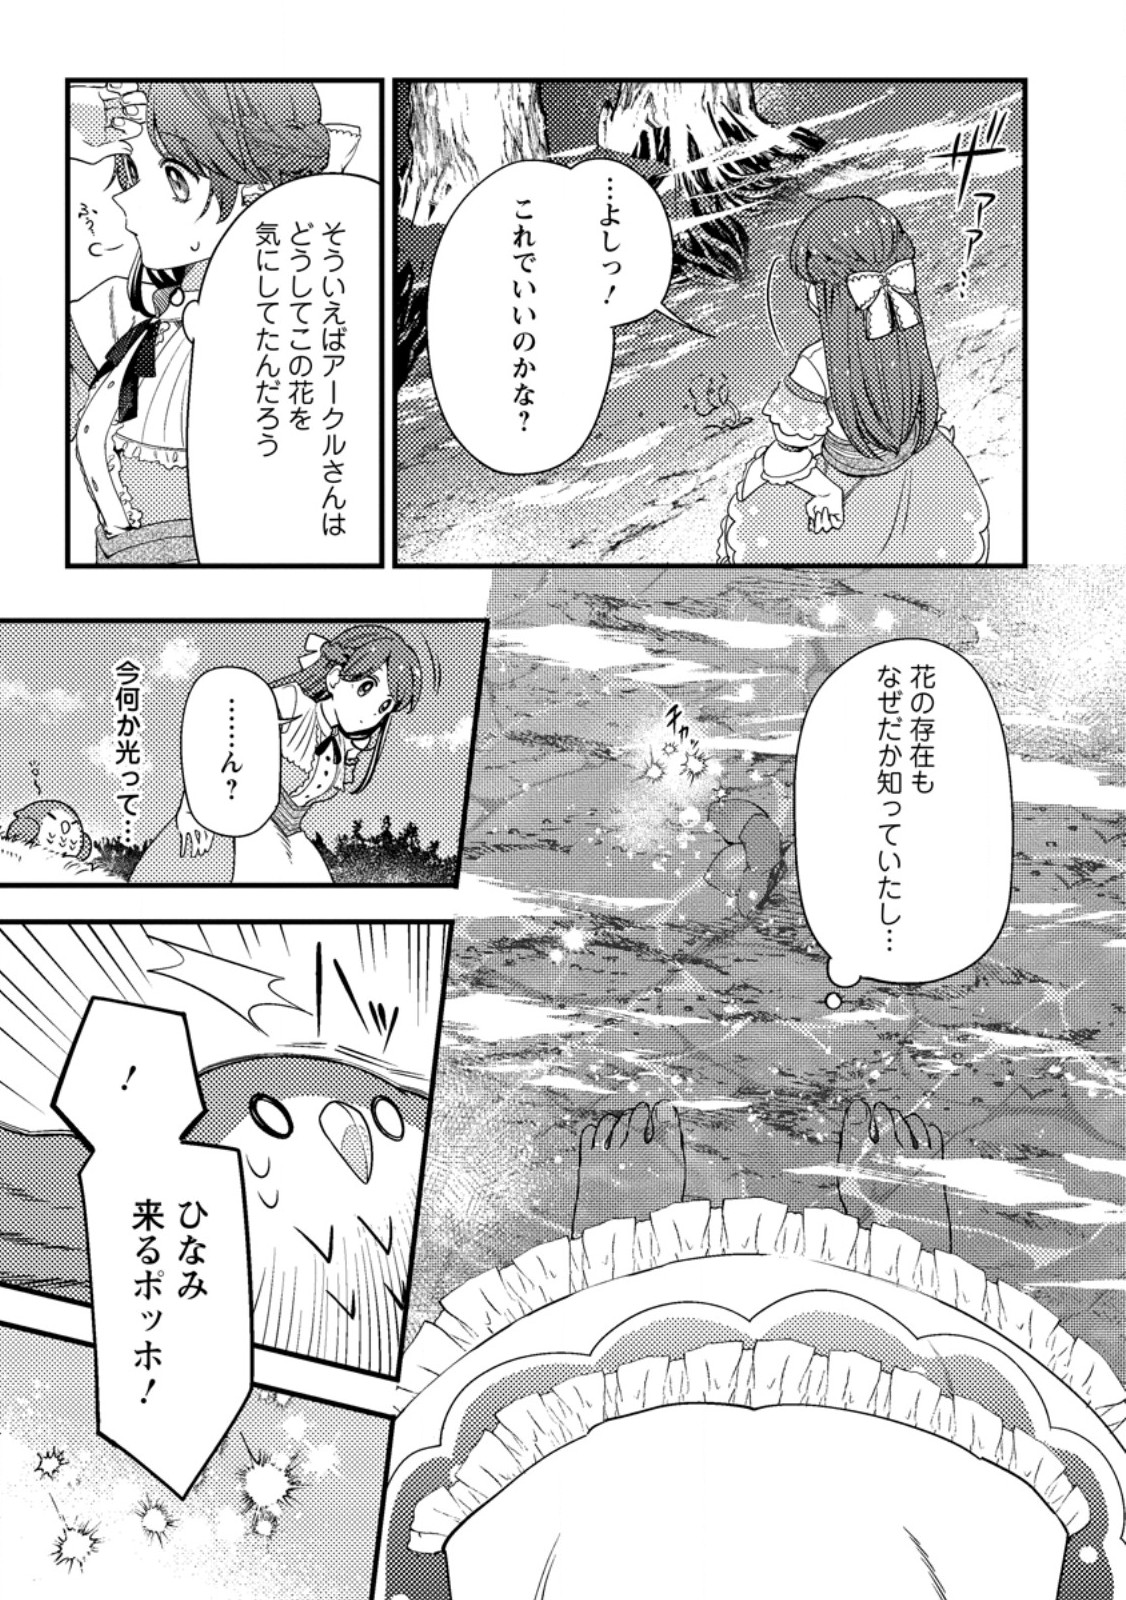 Hakoniwa no Yakujutsushi - Chapter 40.2 - Page 1